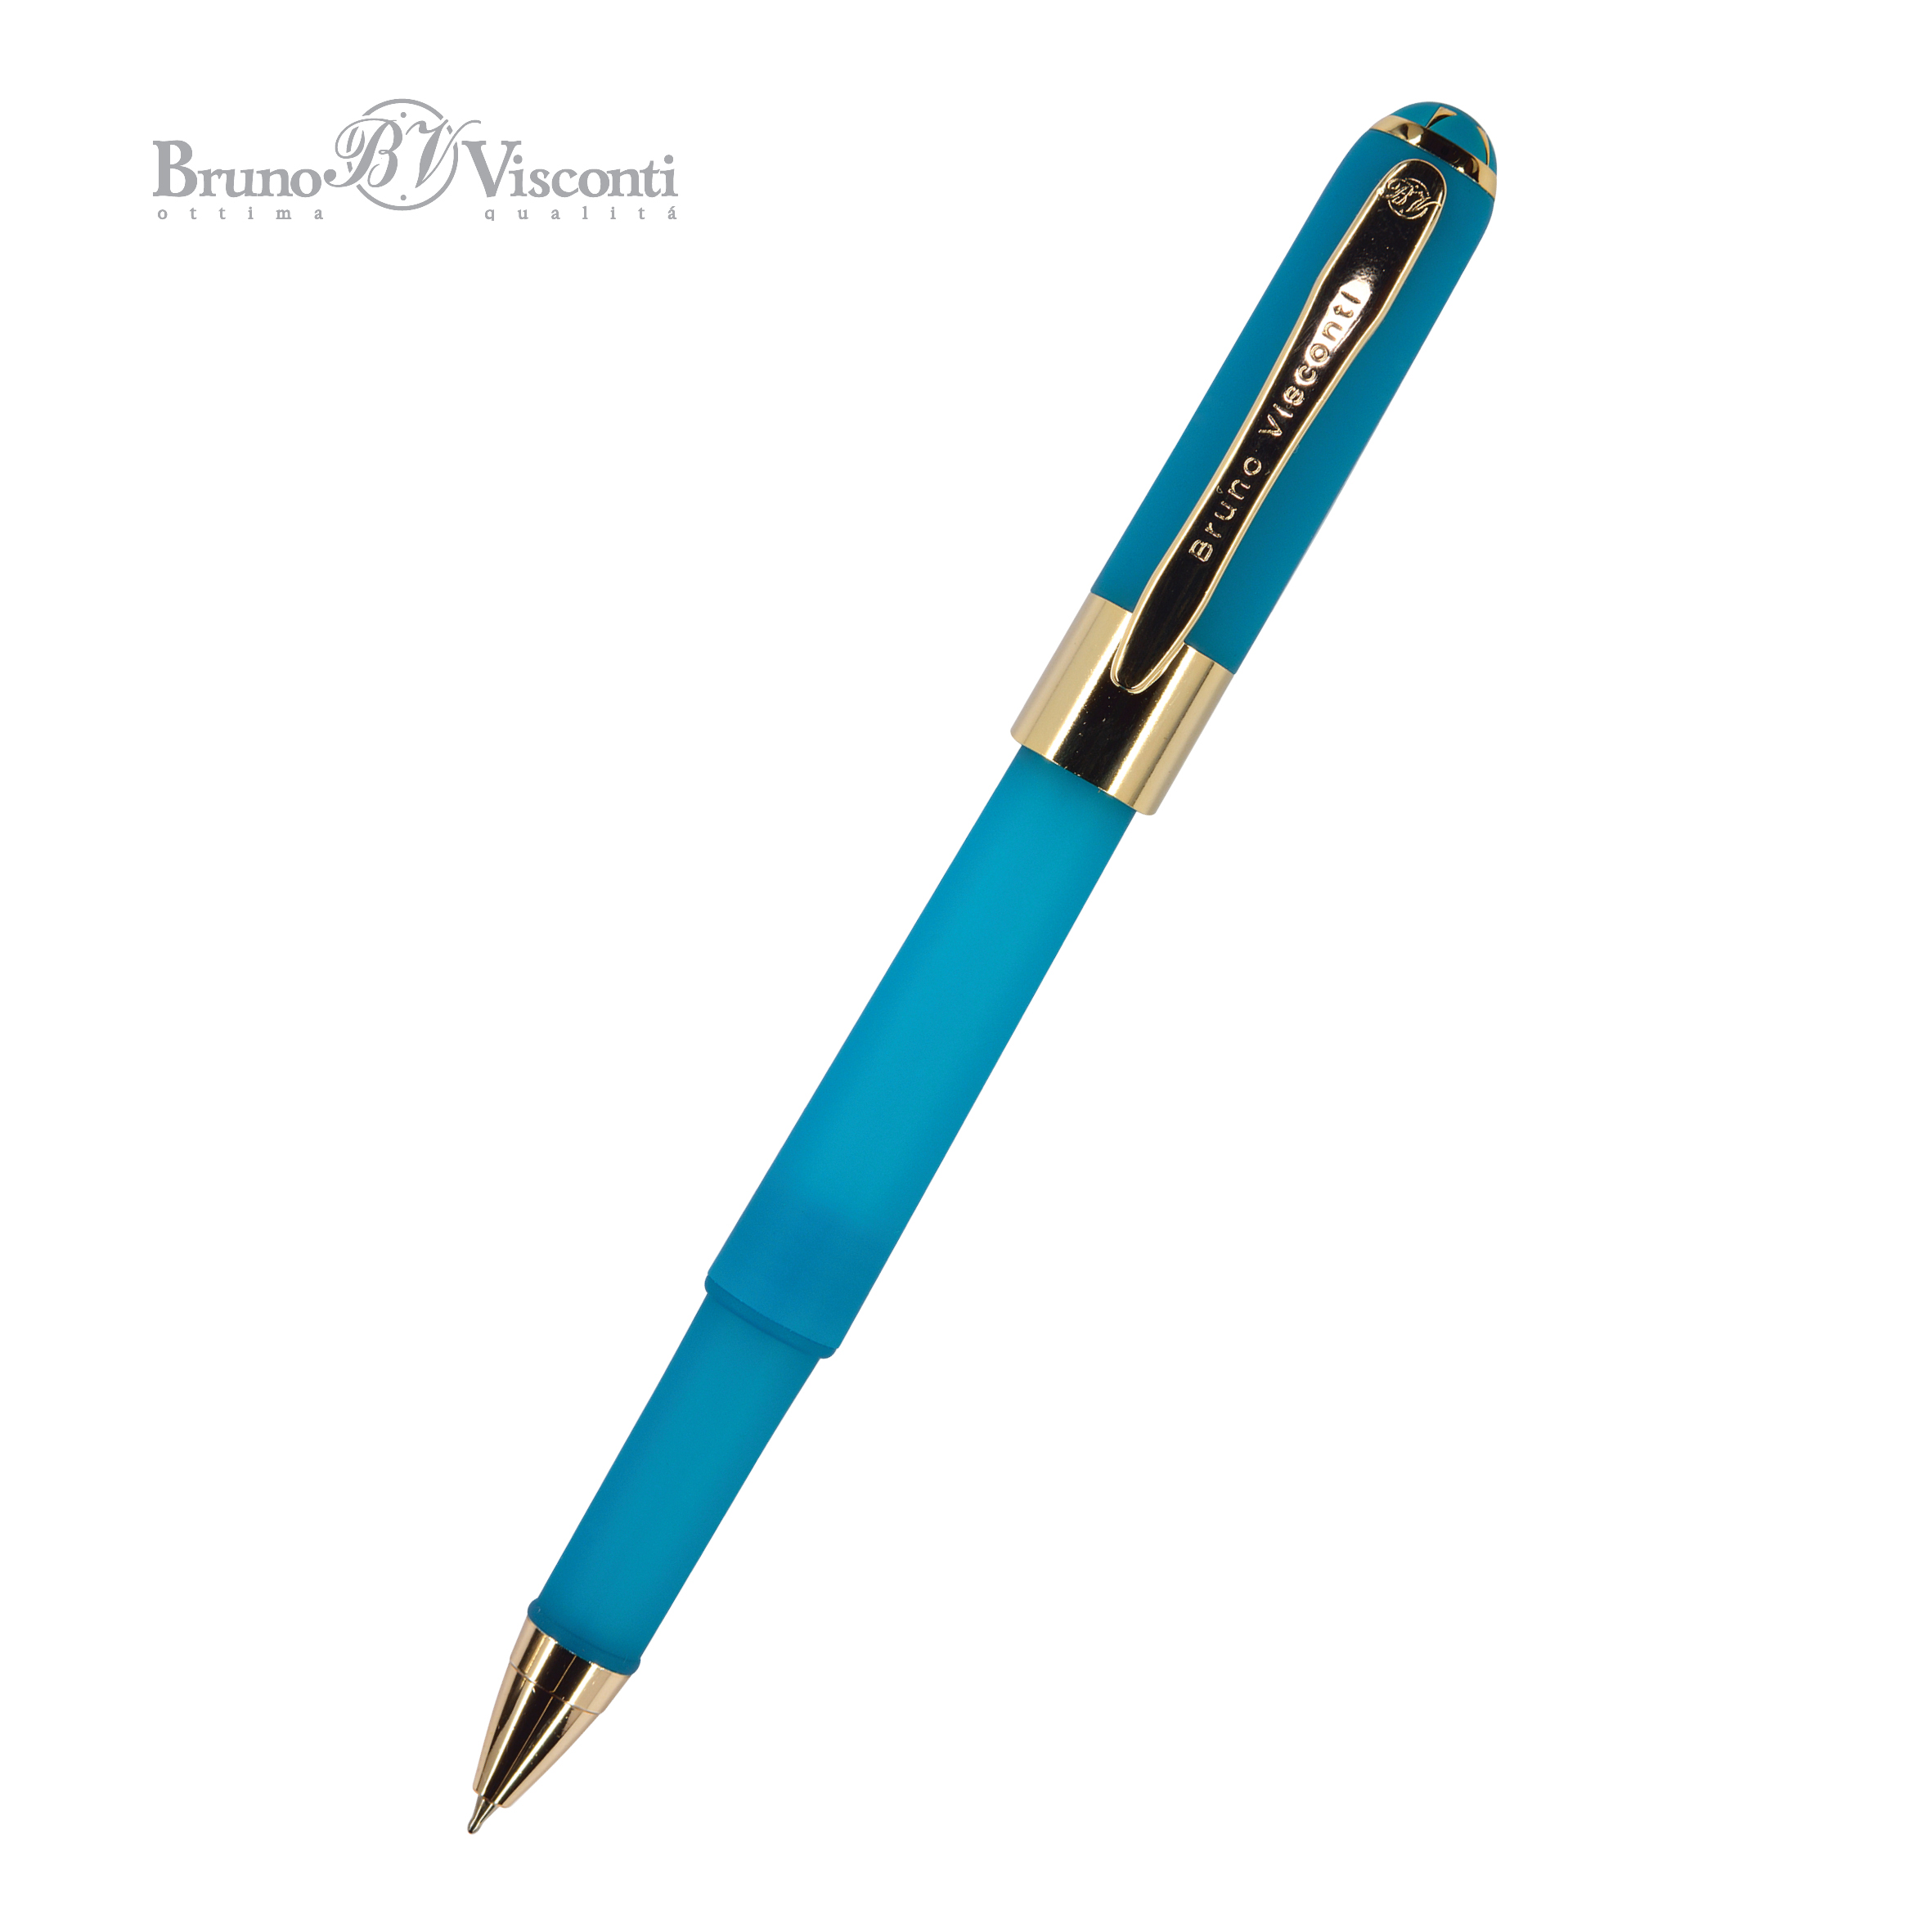 Ручка подар шар BV Monaco синяя 0,5мм бирюзовый корпус